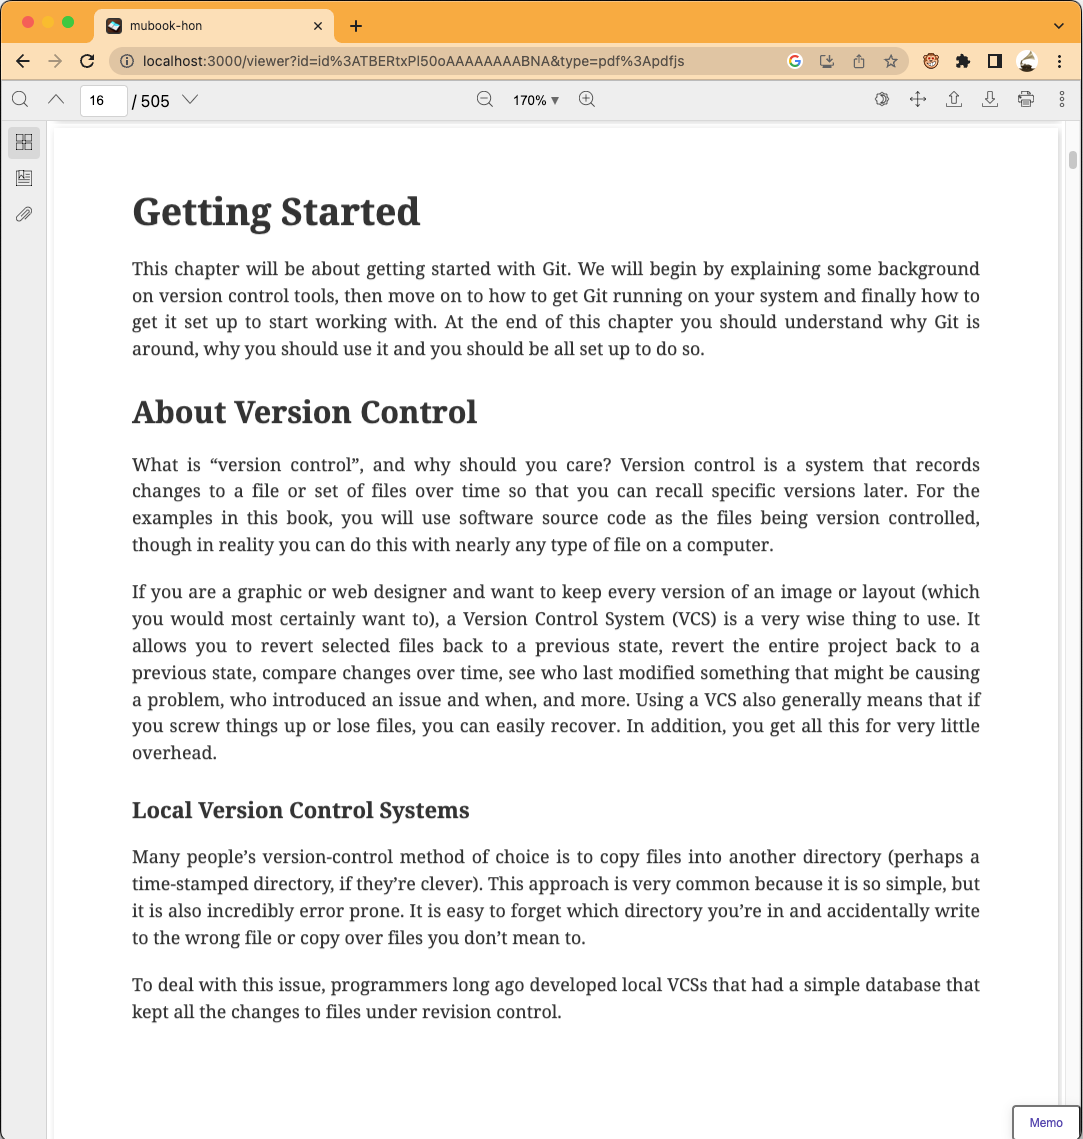 viewer: Pro Git book - CC BY-NC-SA 3.0